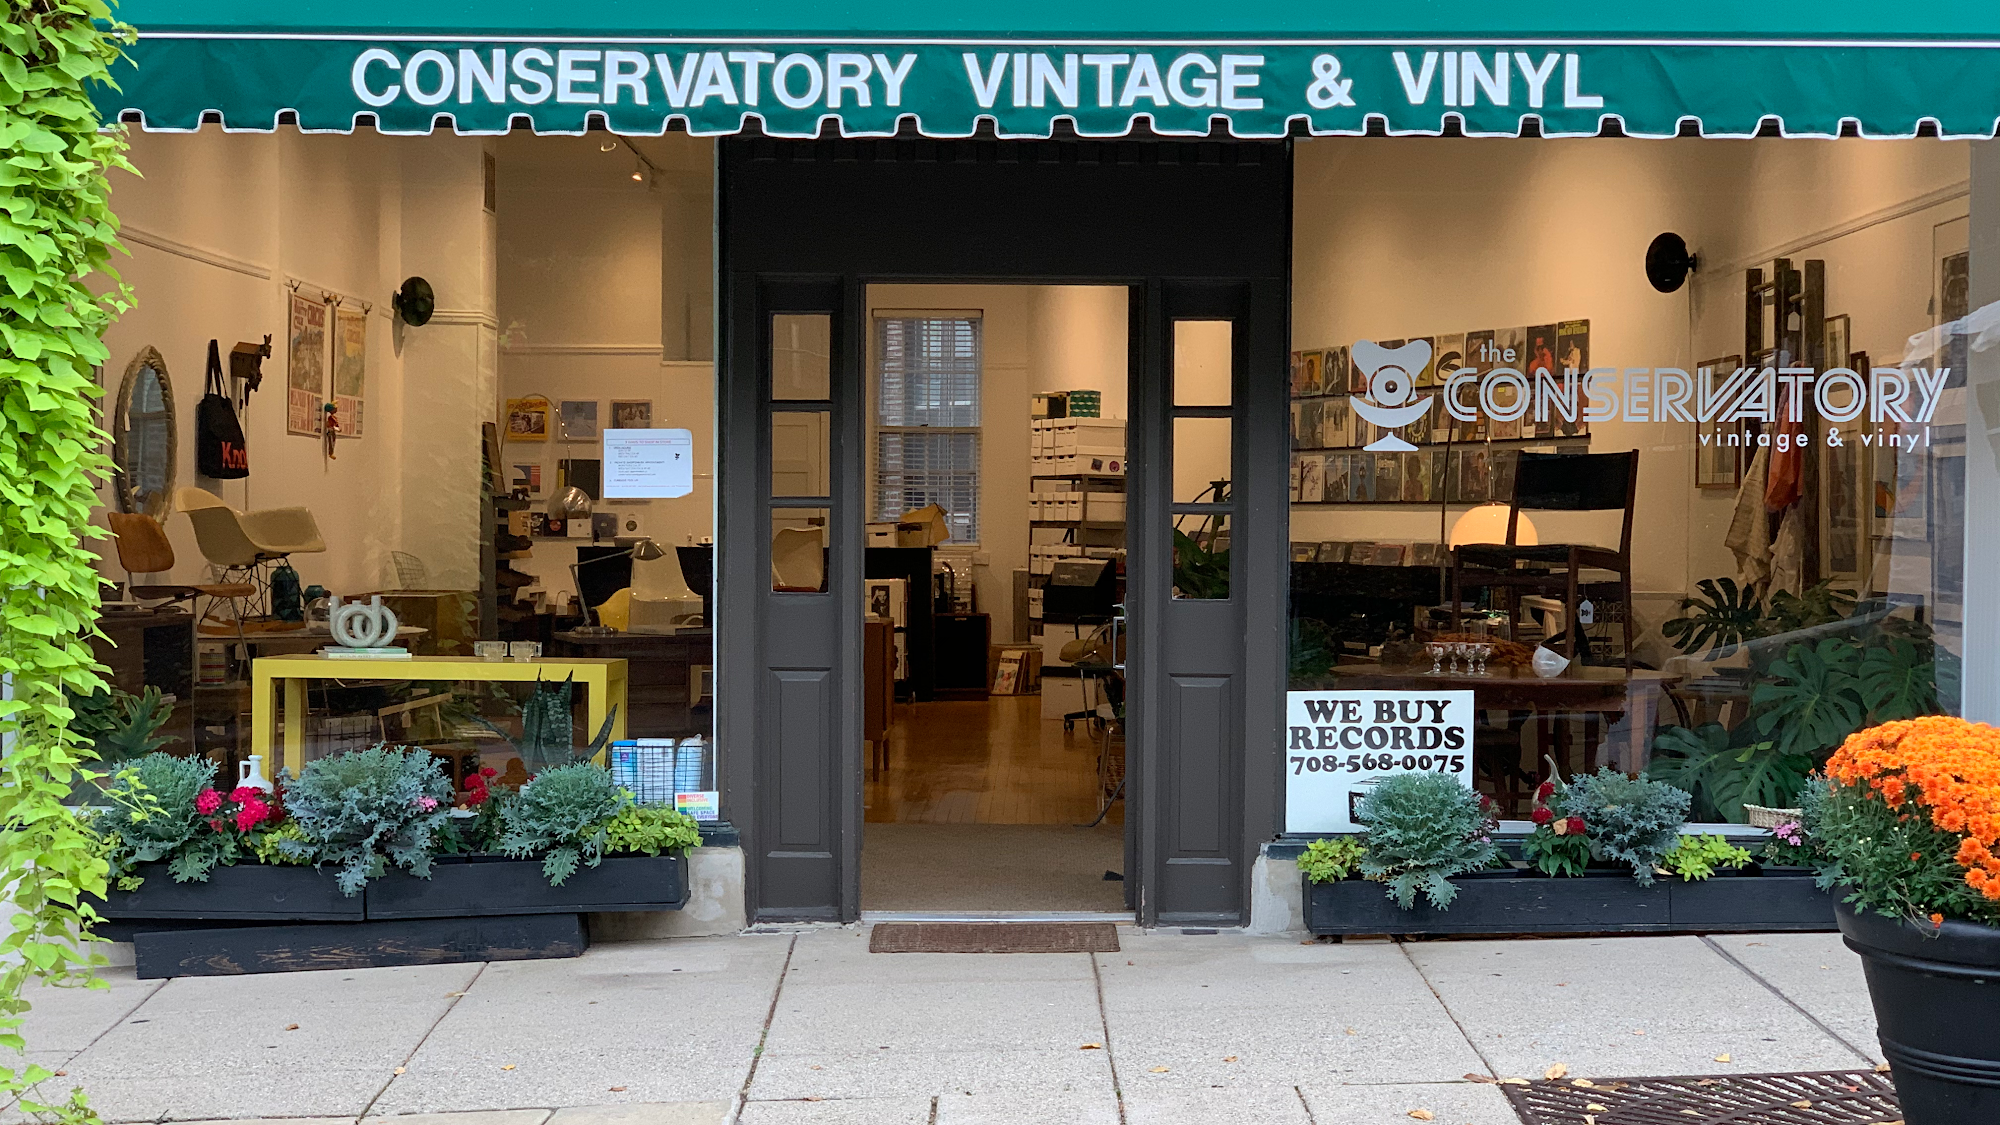 Conservatory Vintage & Vinyl